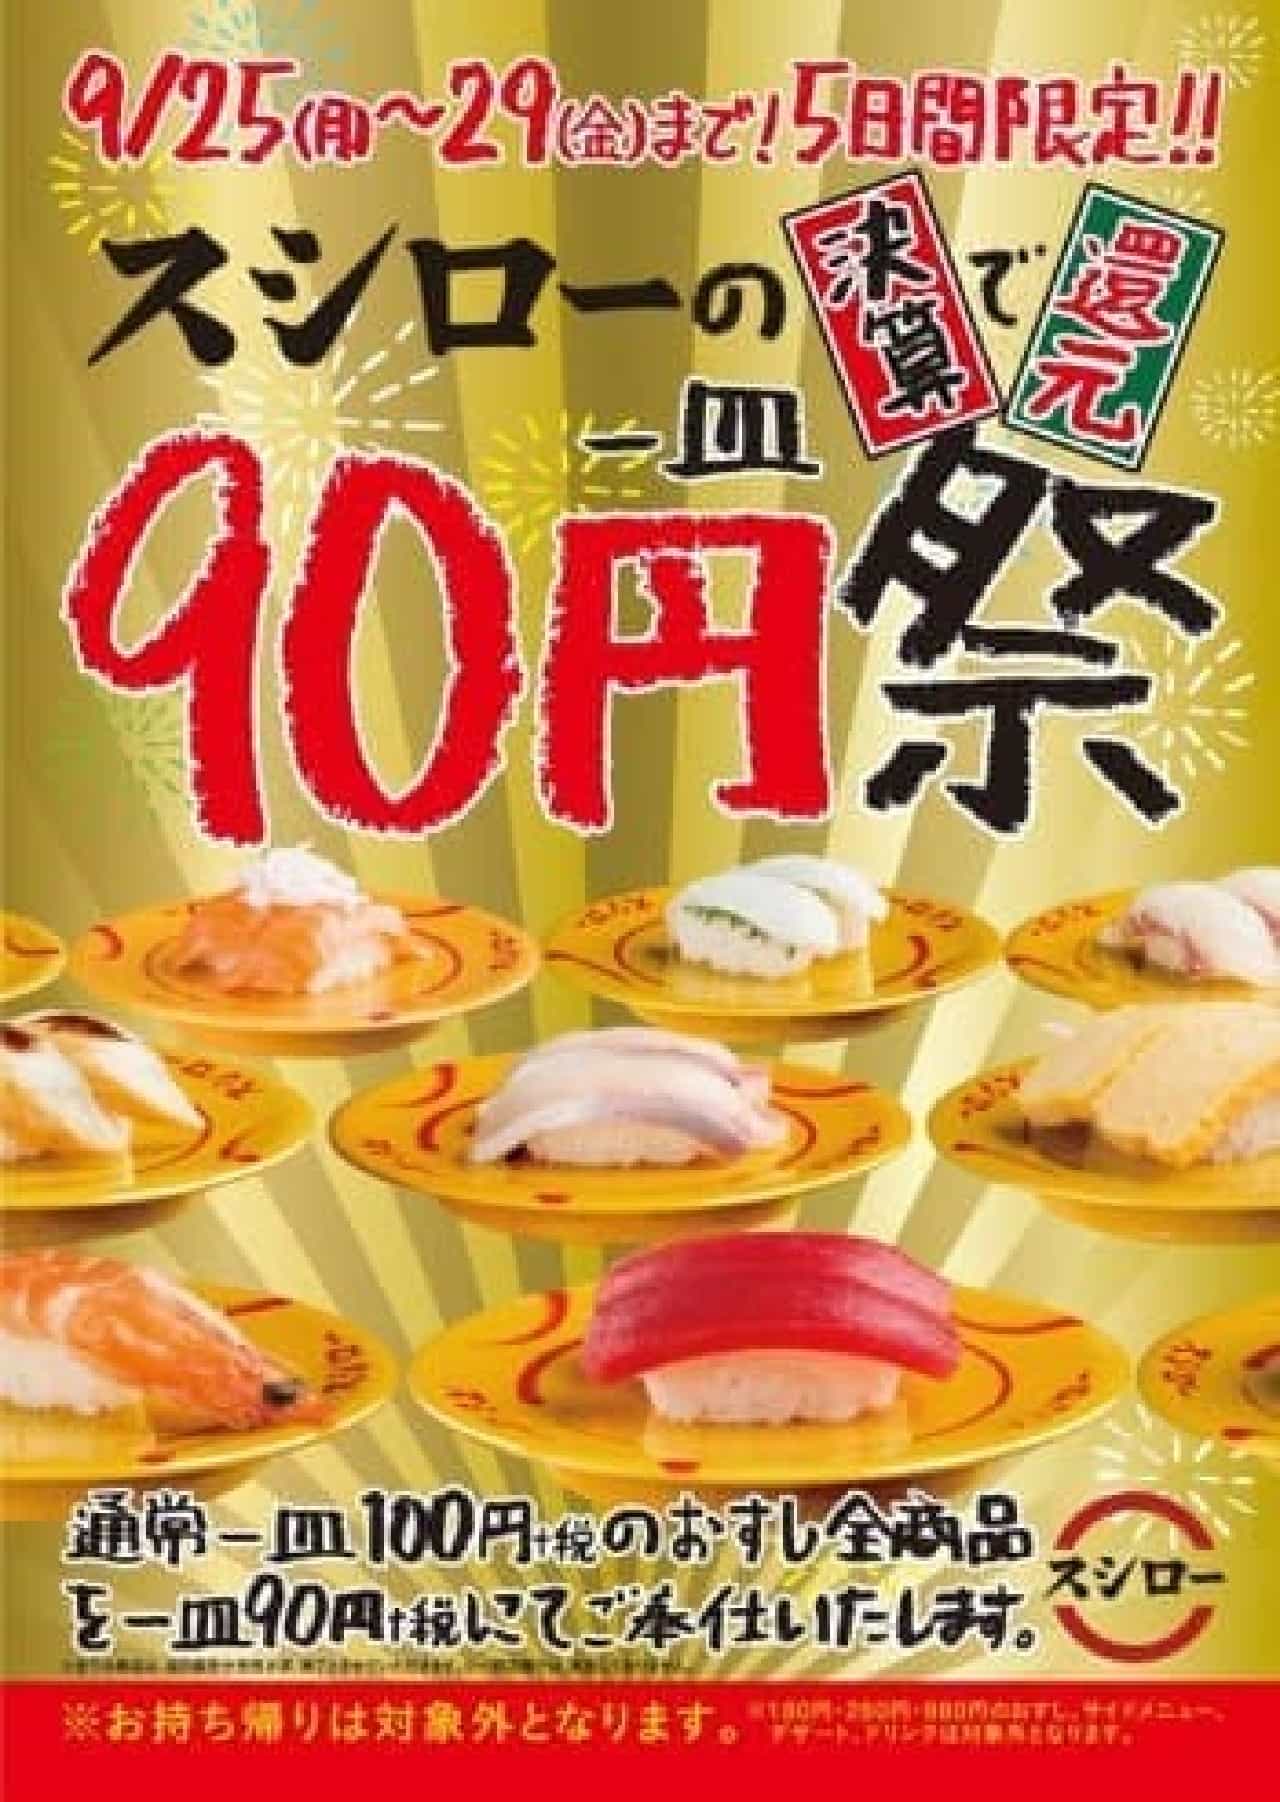 "90 Yen Festival" is held at each Sushiro store